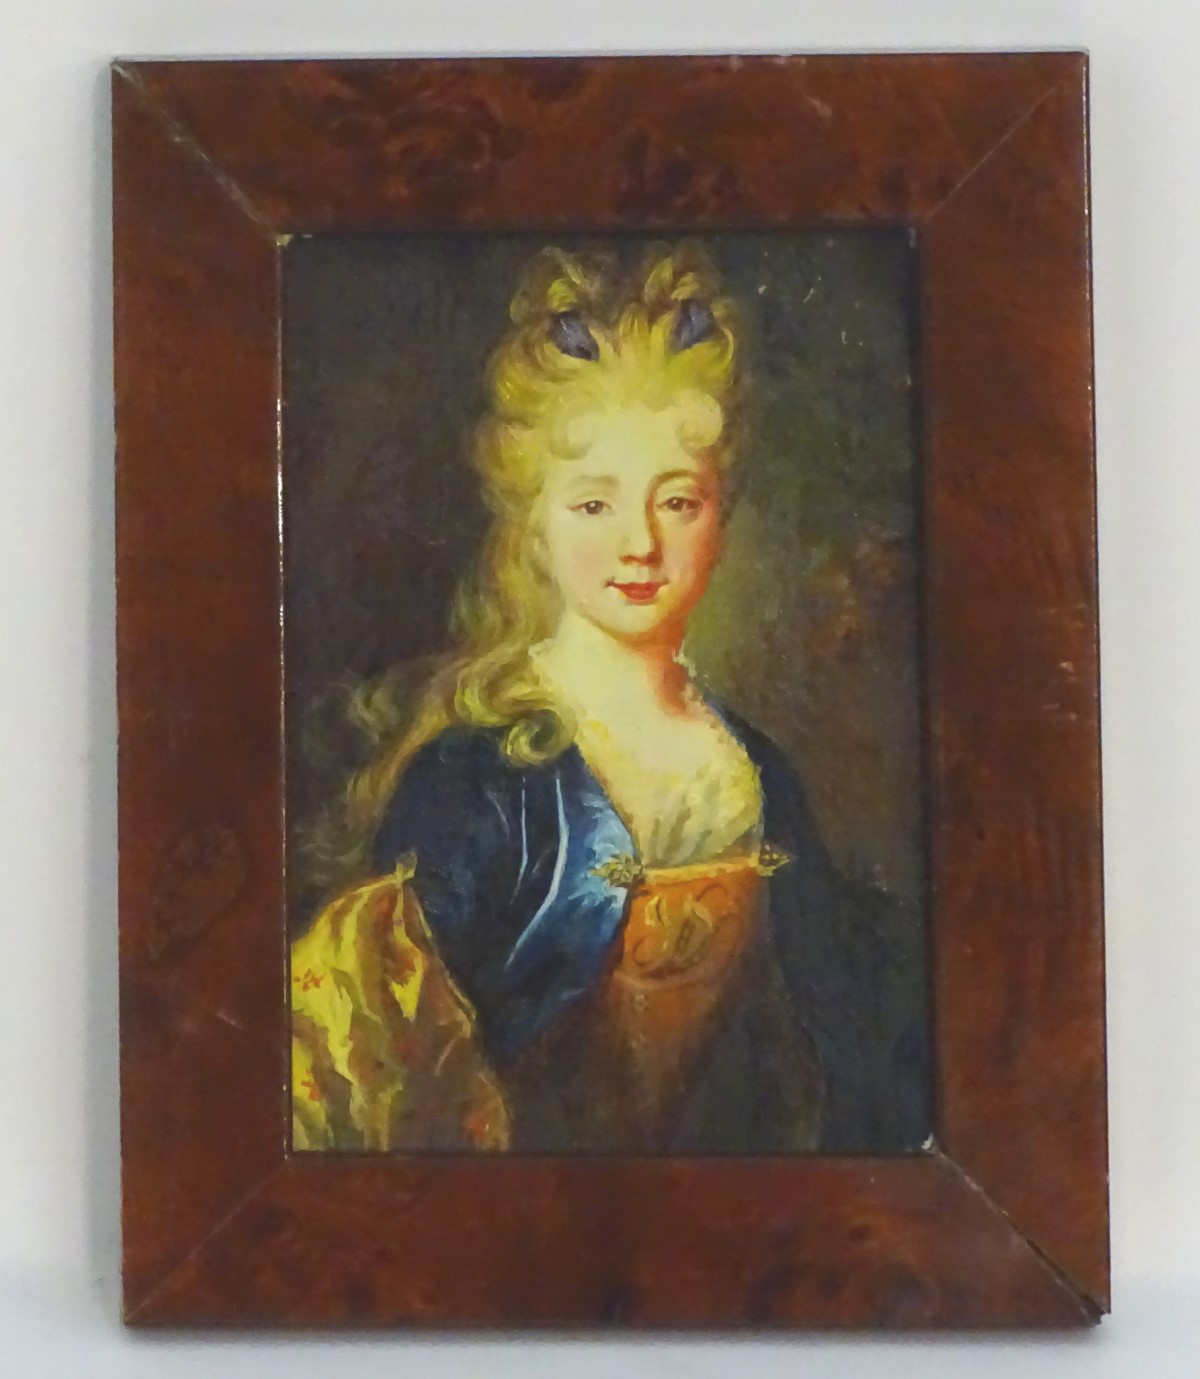 After Nicolas de Largilliere (1656-1746), Oil on card laid on board,